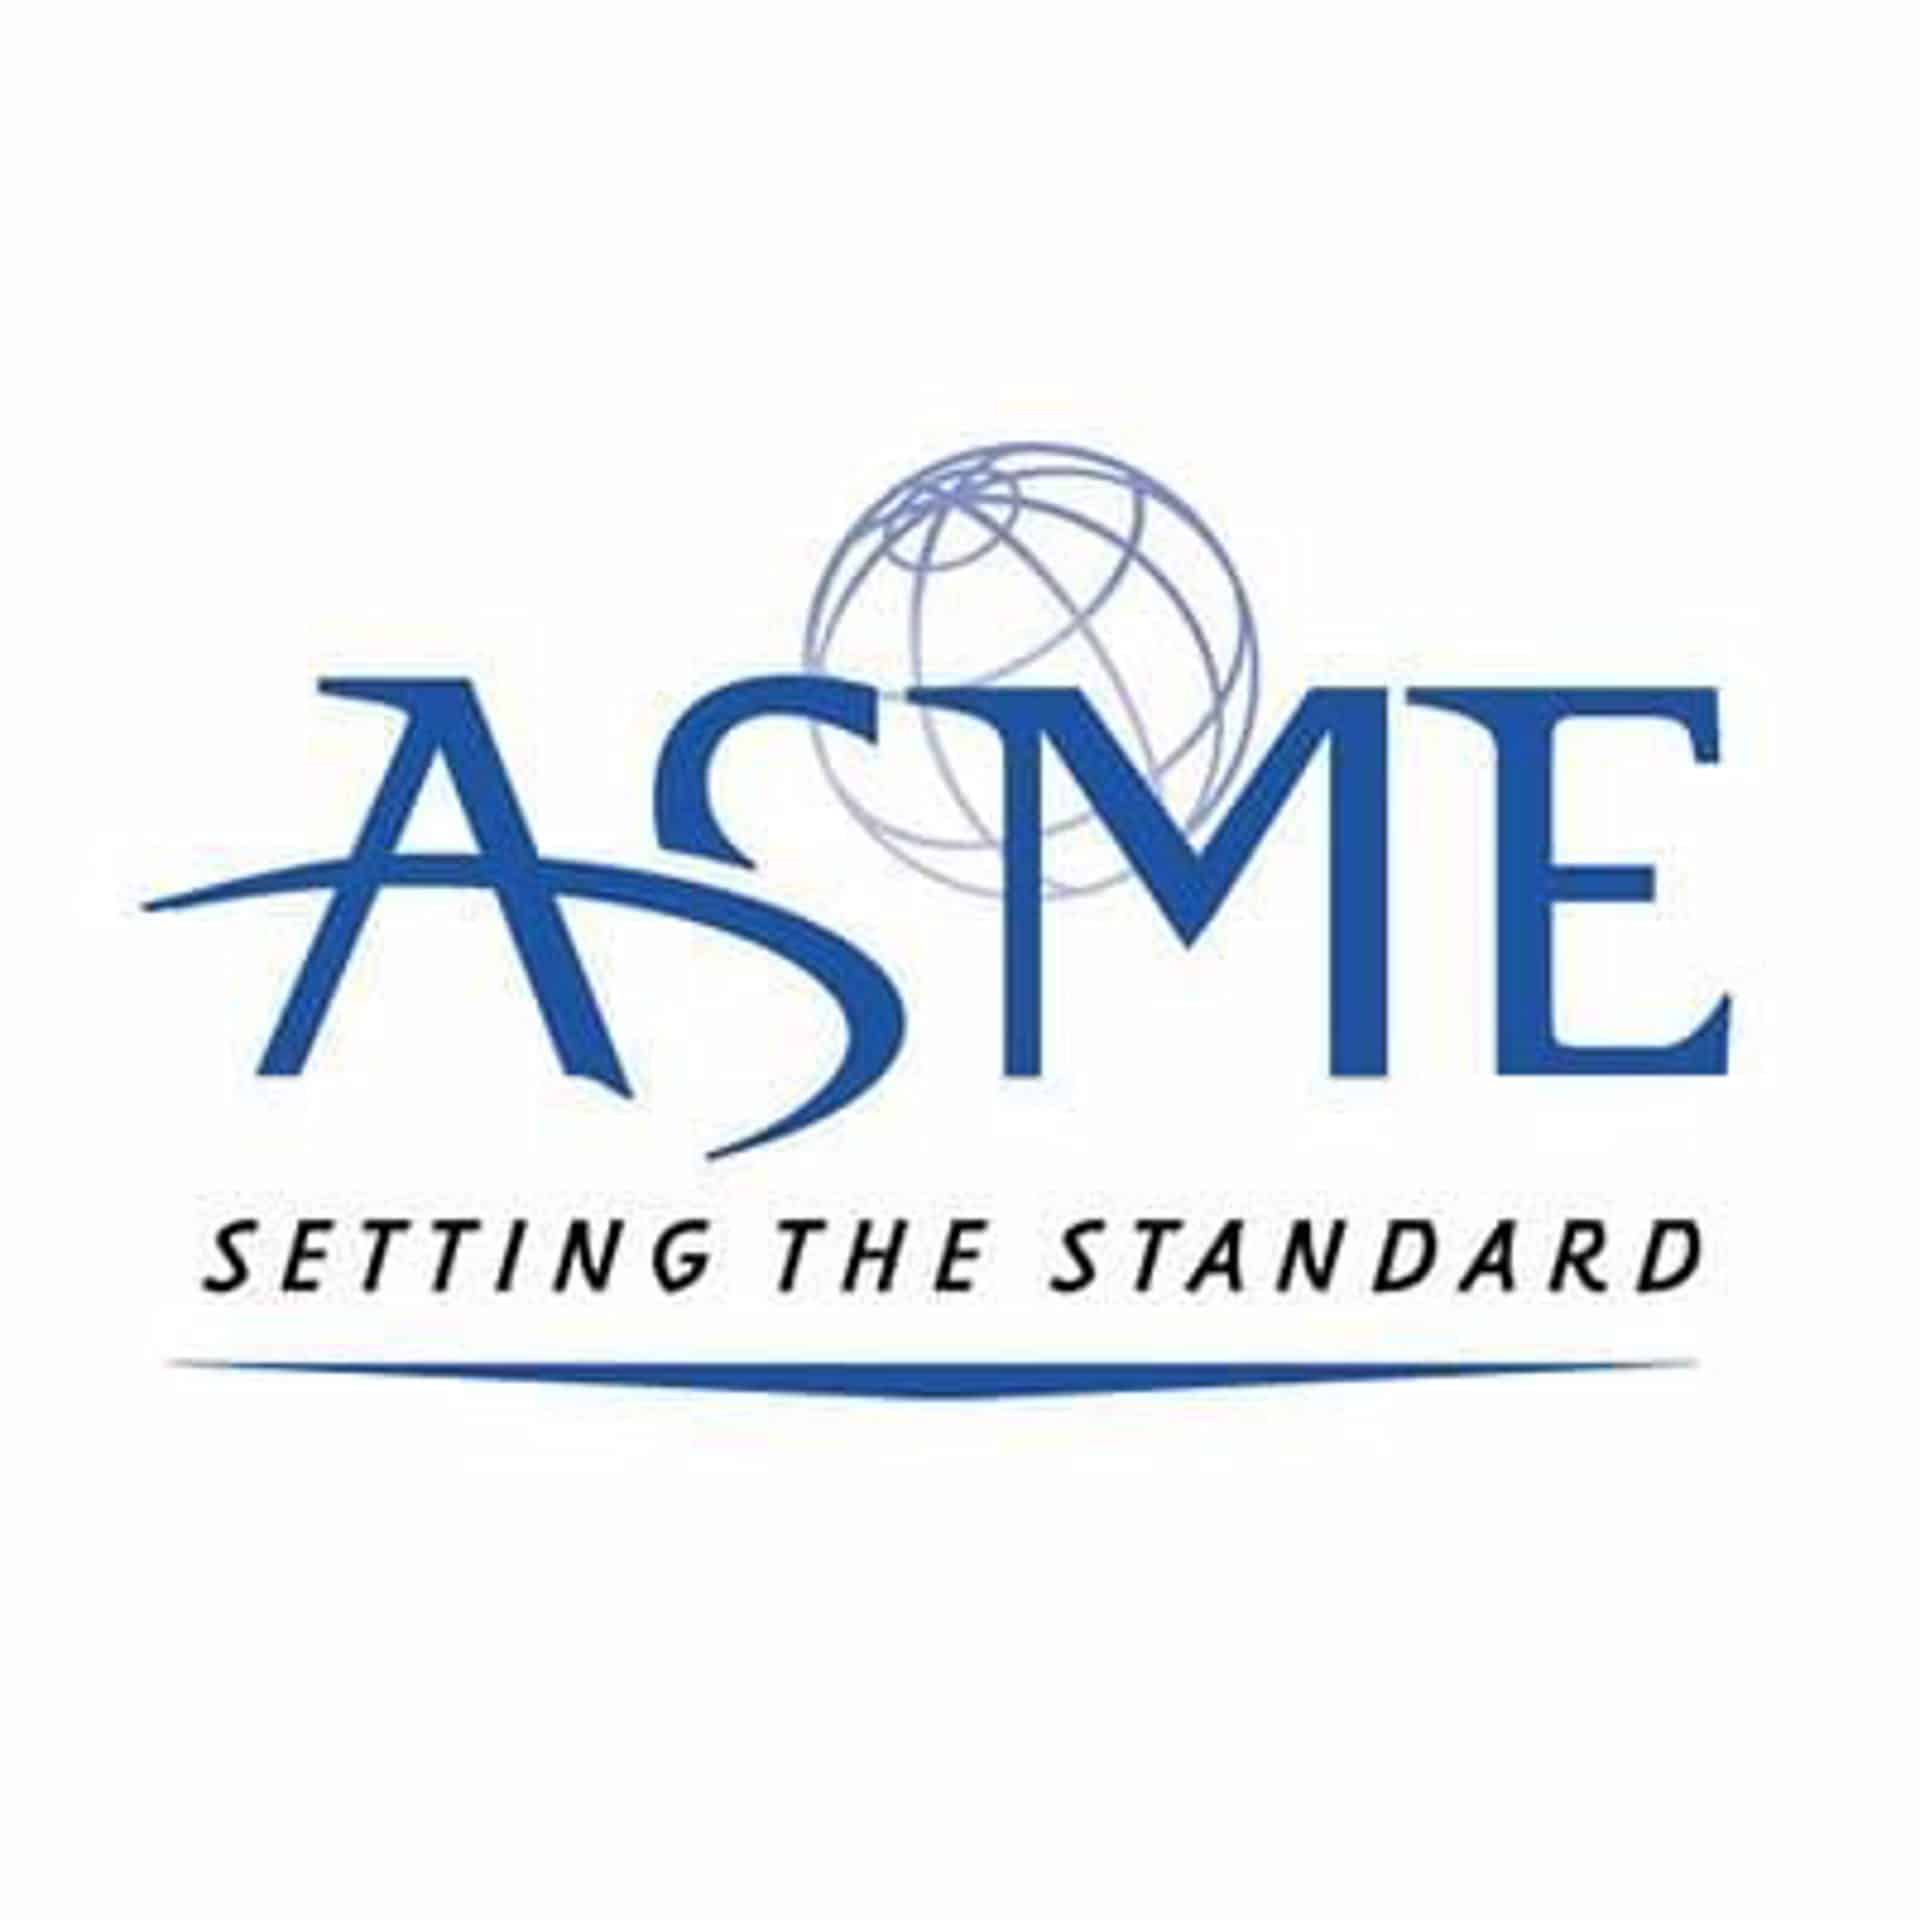 ASME - Setting the Standard logo